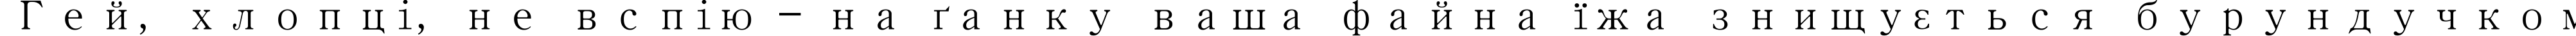 Пример написания шрифтом MS Mincho текста на украинском